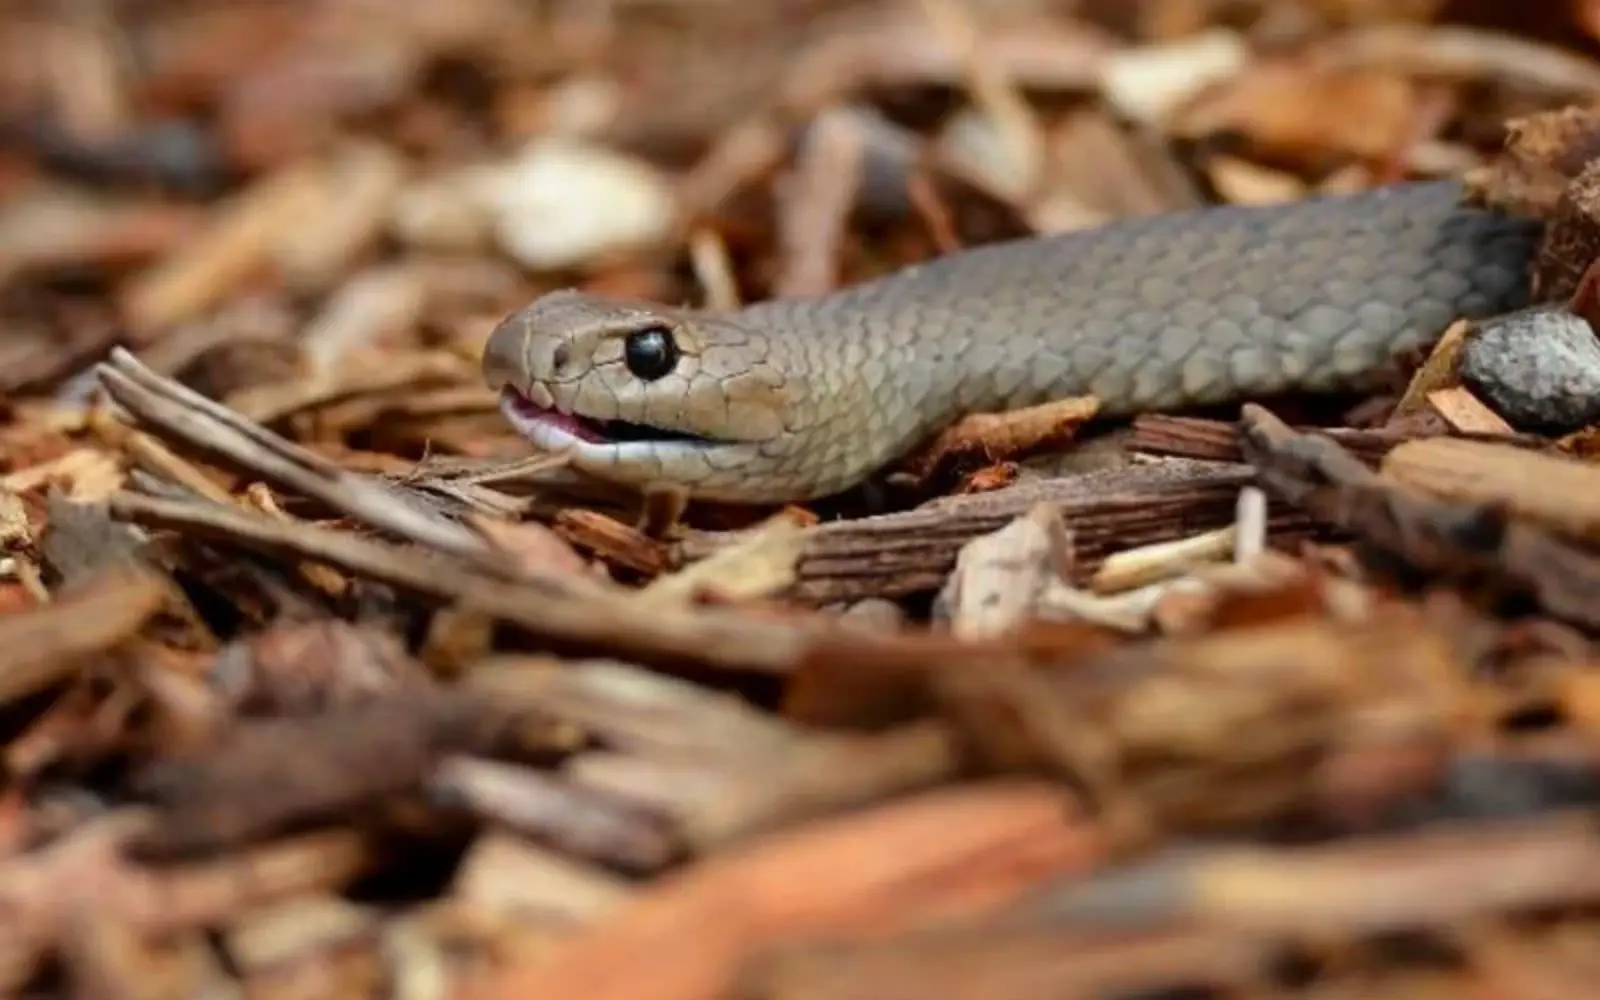 Australian man dies after snake bite